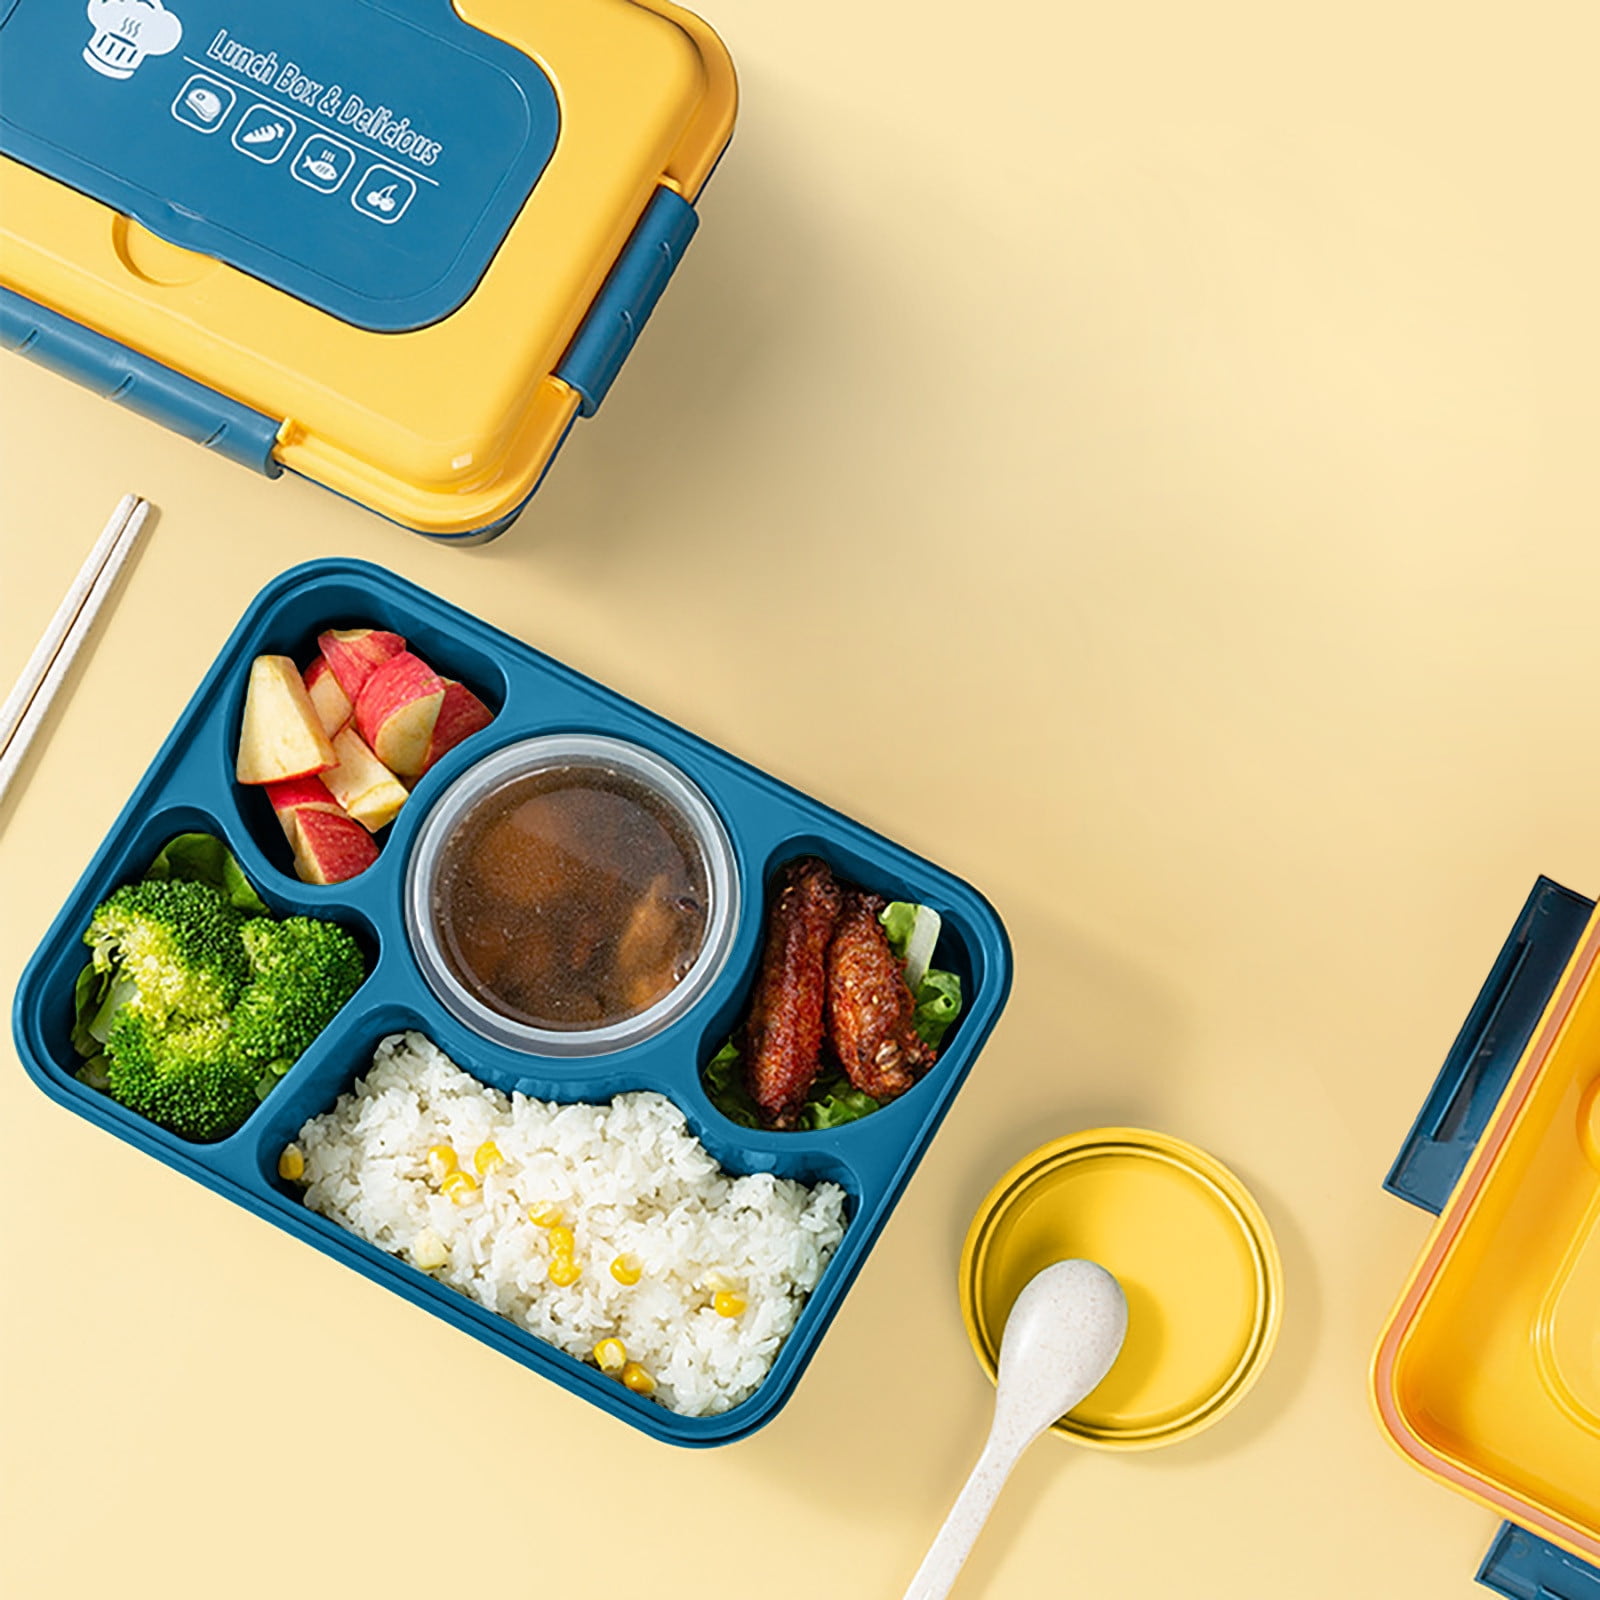 Ins Portable Plastic Kids Nutrition Balance 6 Compartments Bento